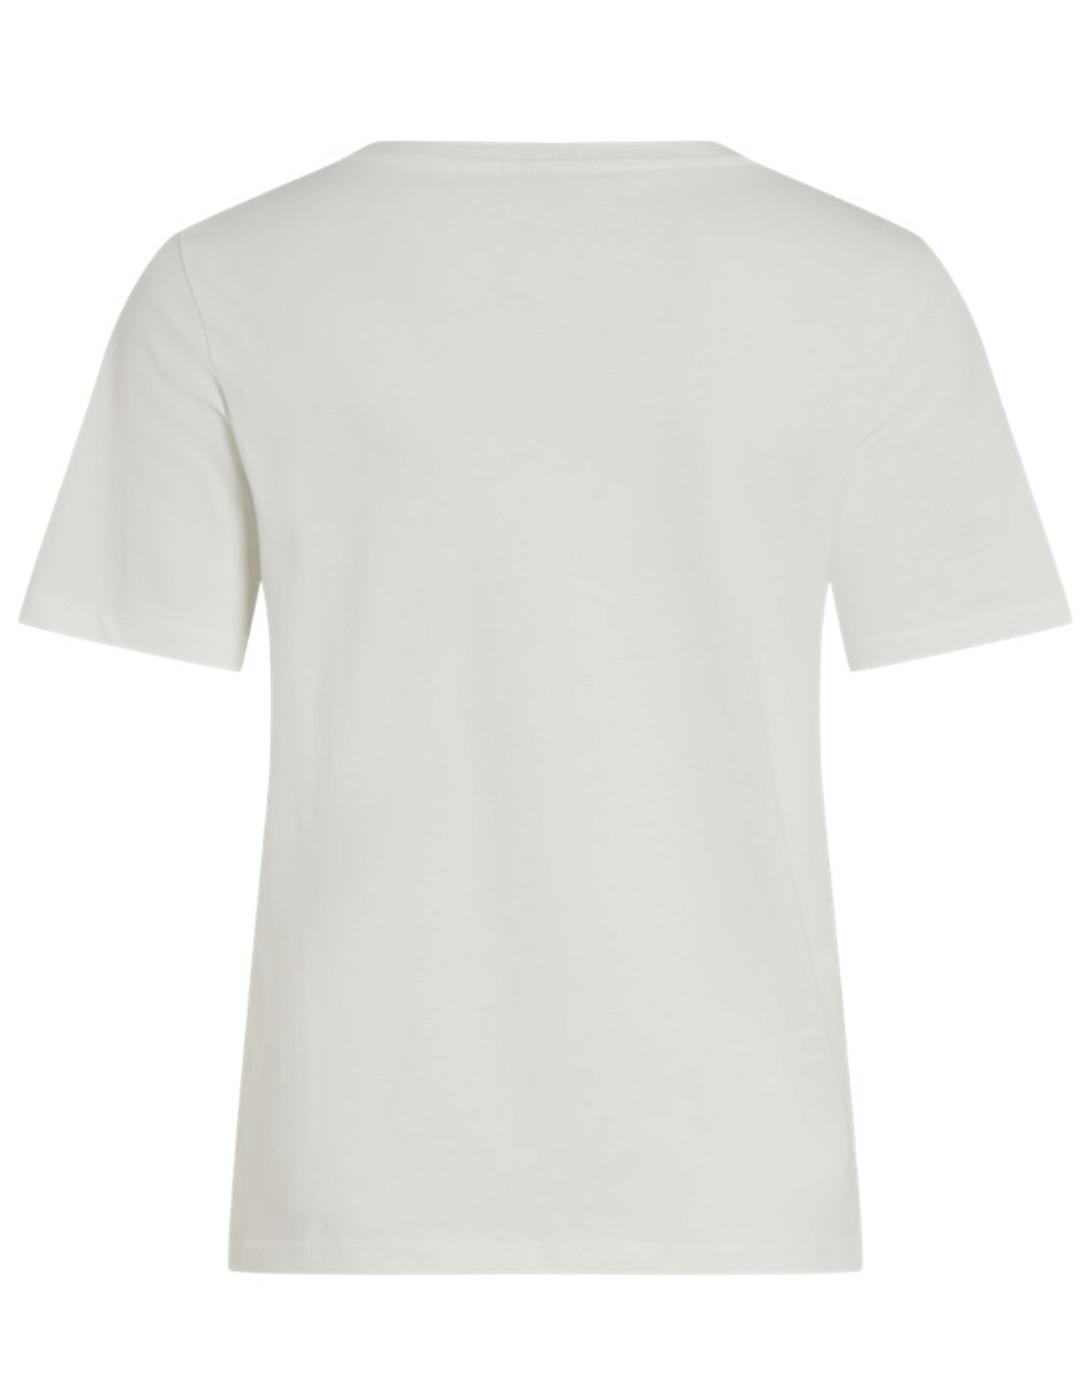 Camiseta Vila Sybilla blanco muse manga corta de mujer